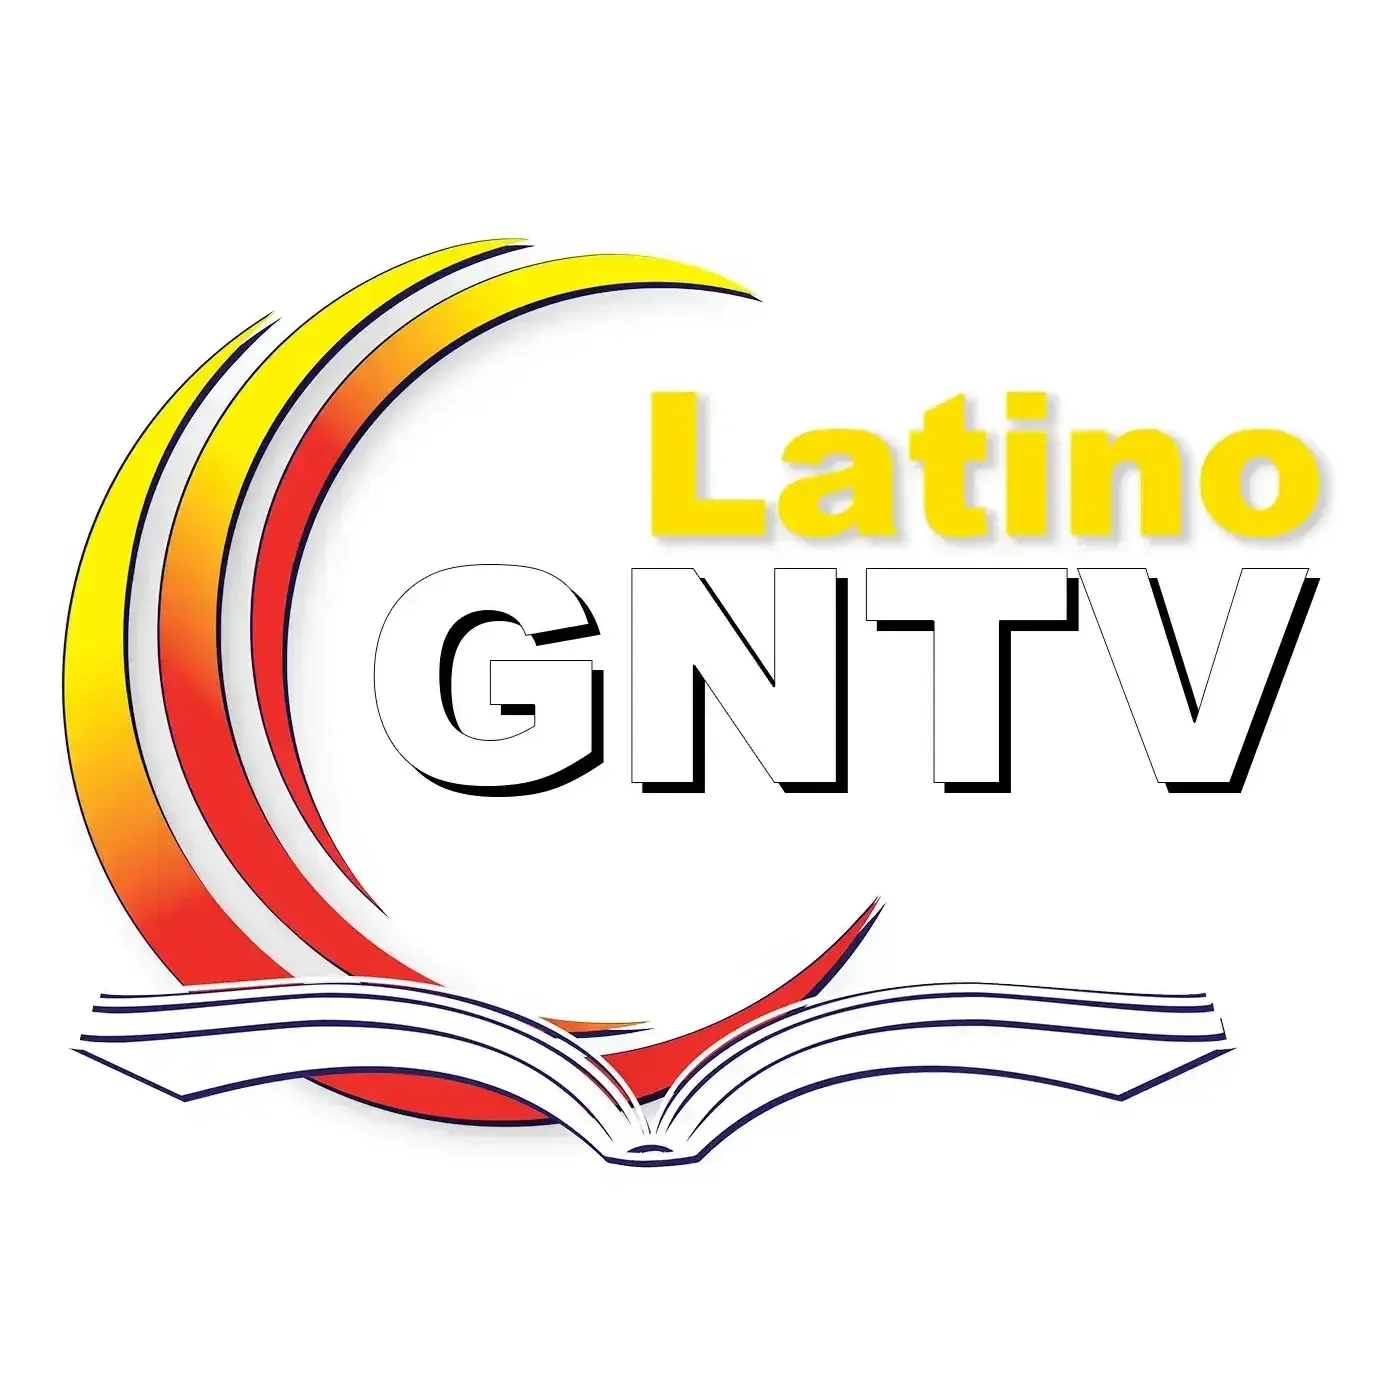 GNTV Latino